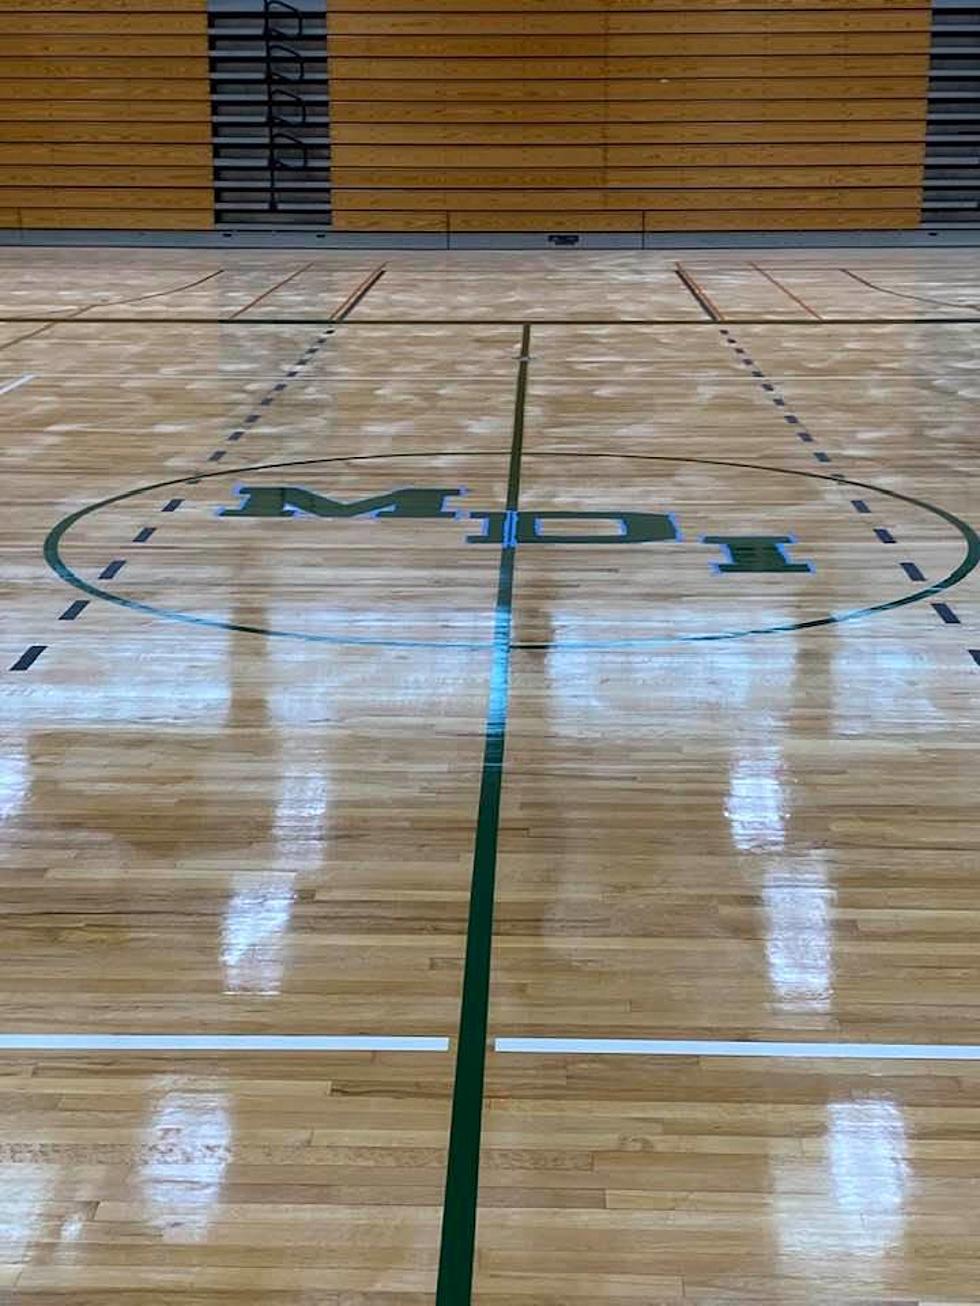 MDI High School&#8217;s Bernard Parady Gymnasium Received a Facelift [PHOTOS]